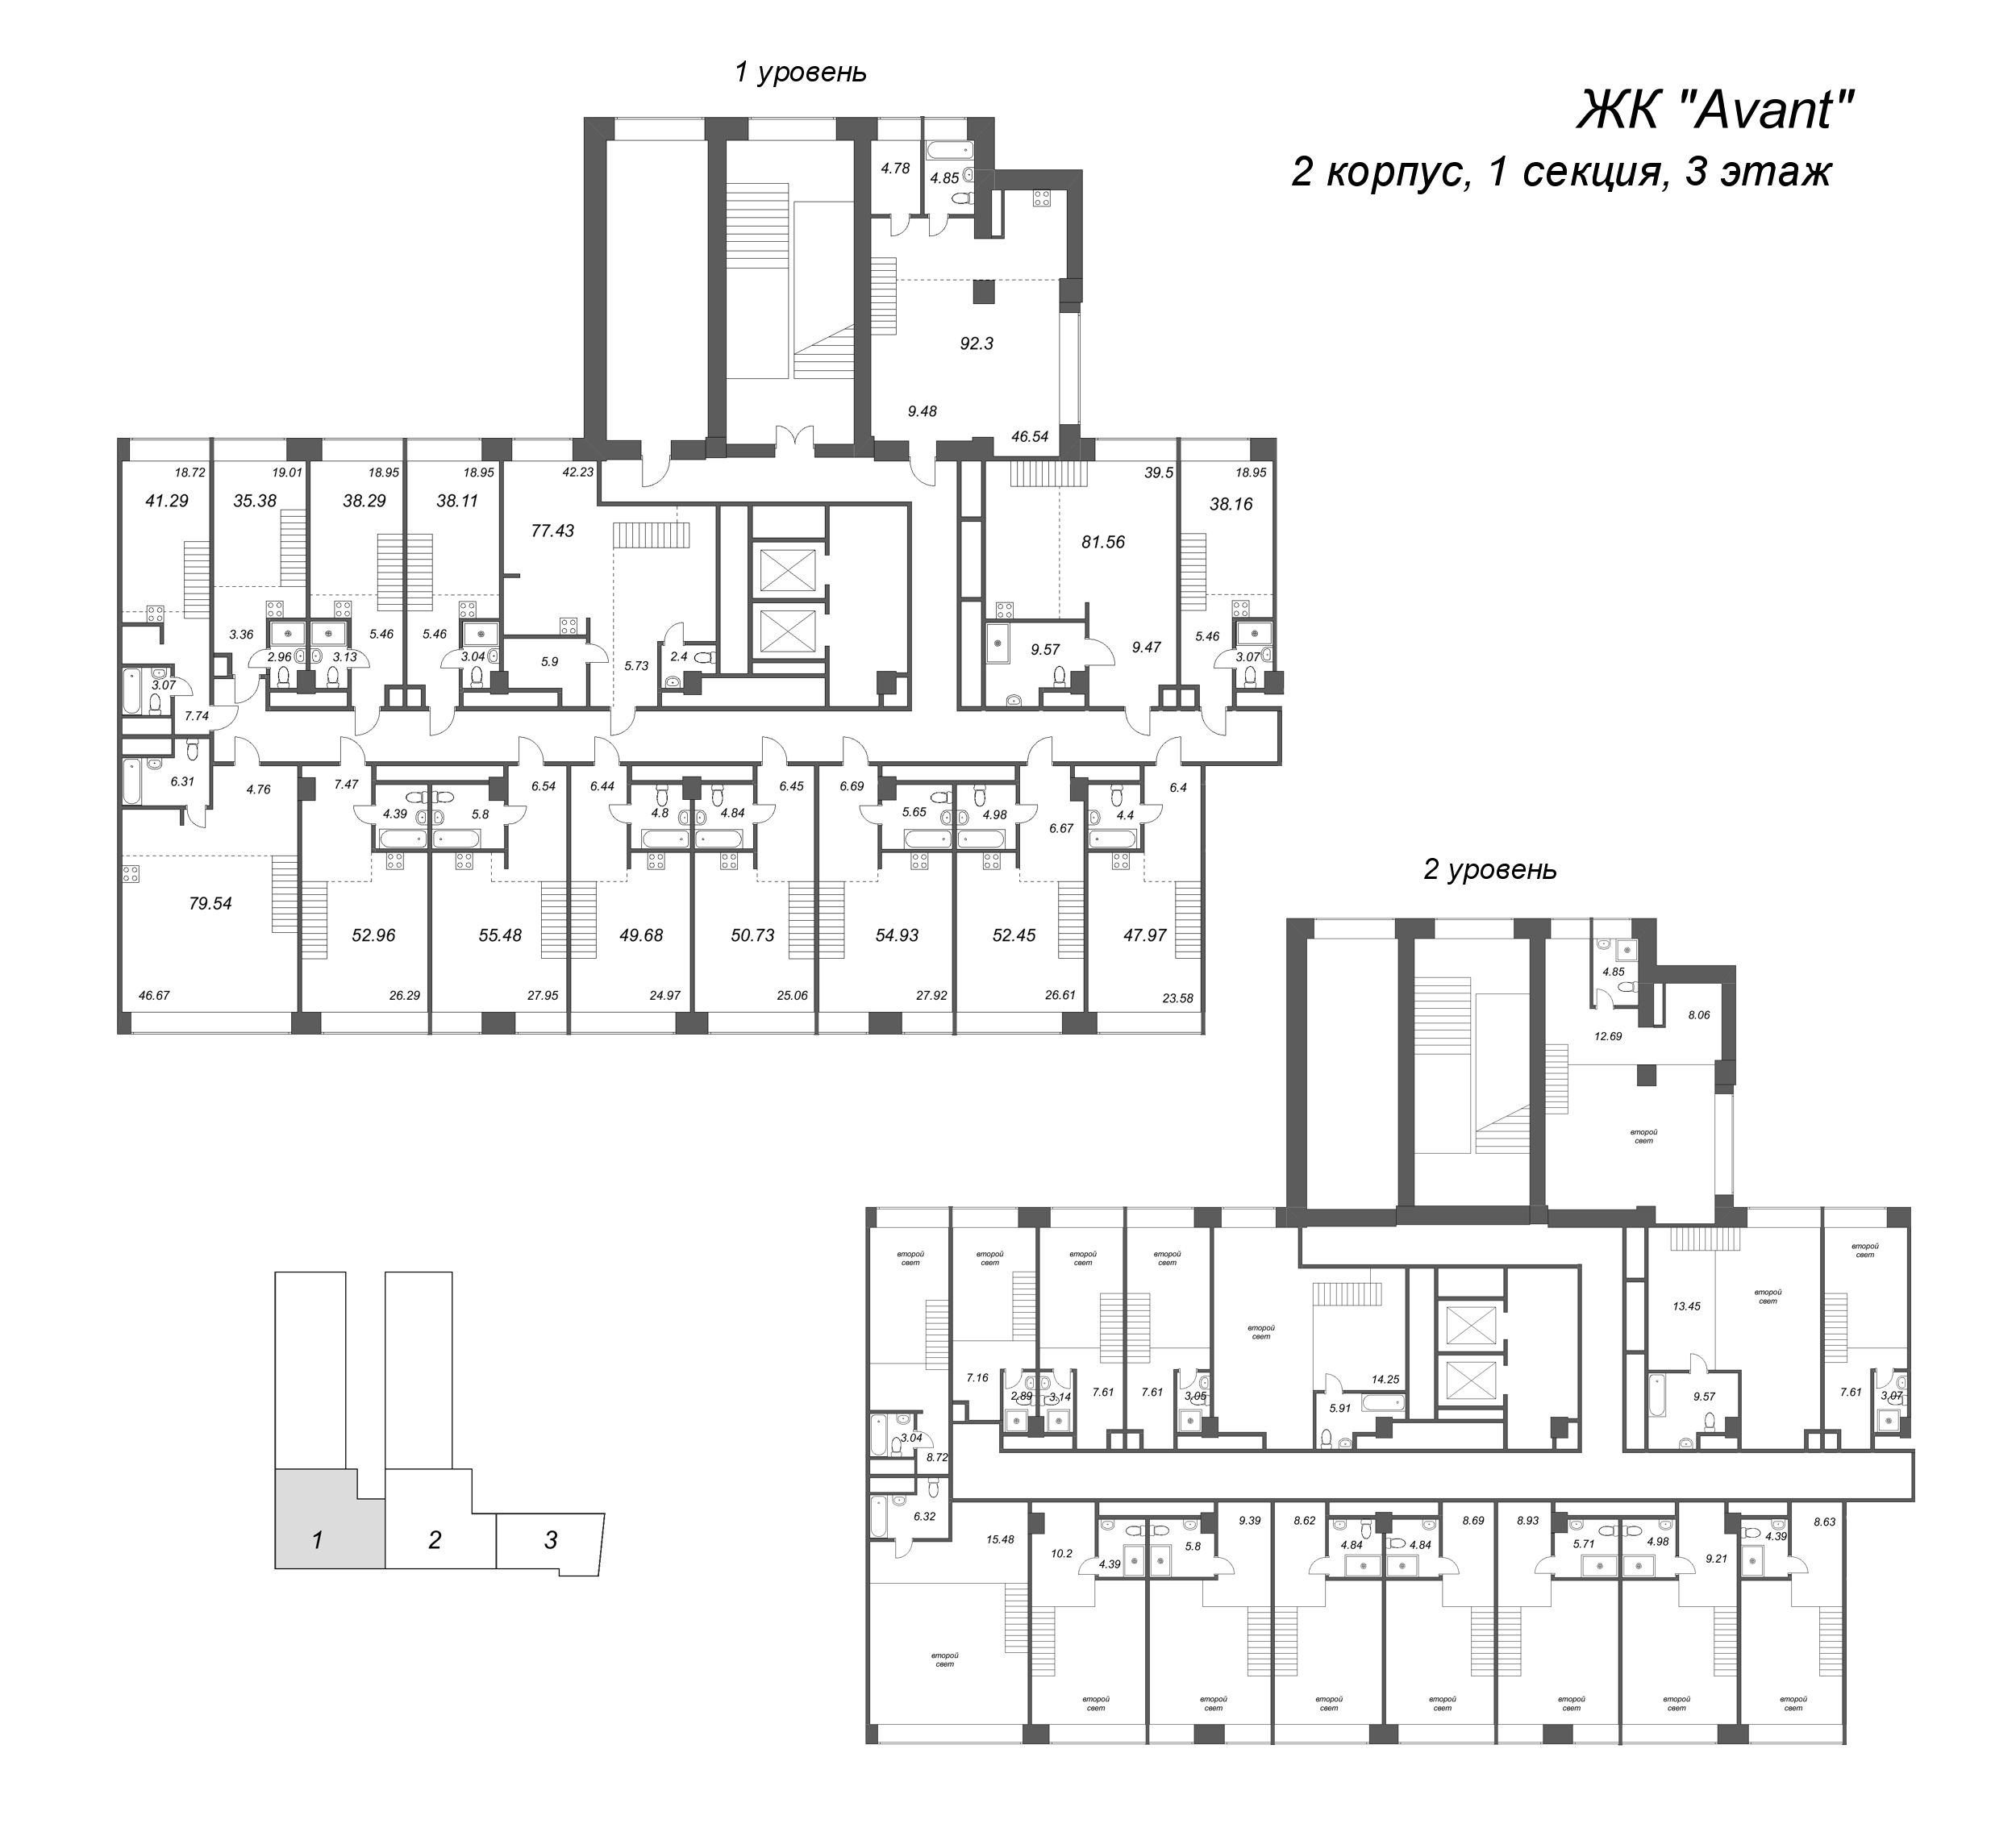 2-комнатная (Евро) квартира, 38.11 м² - планировка этажа